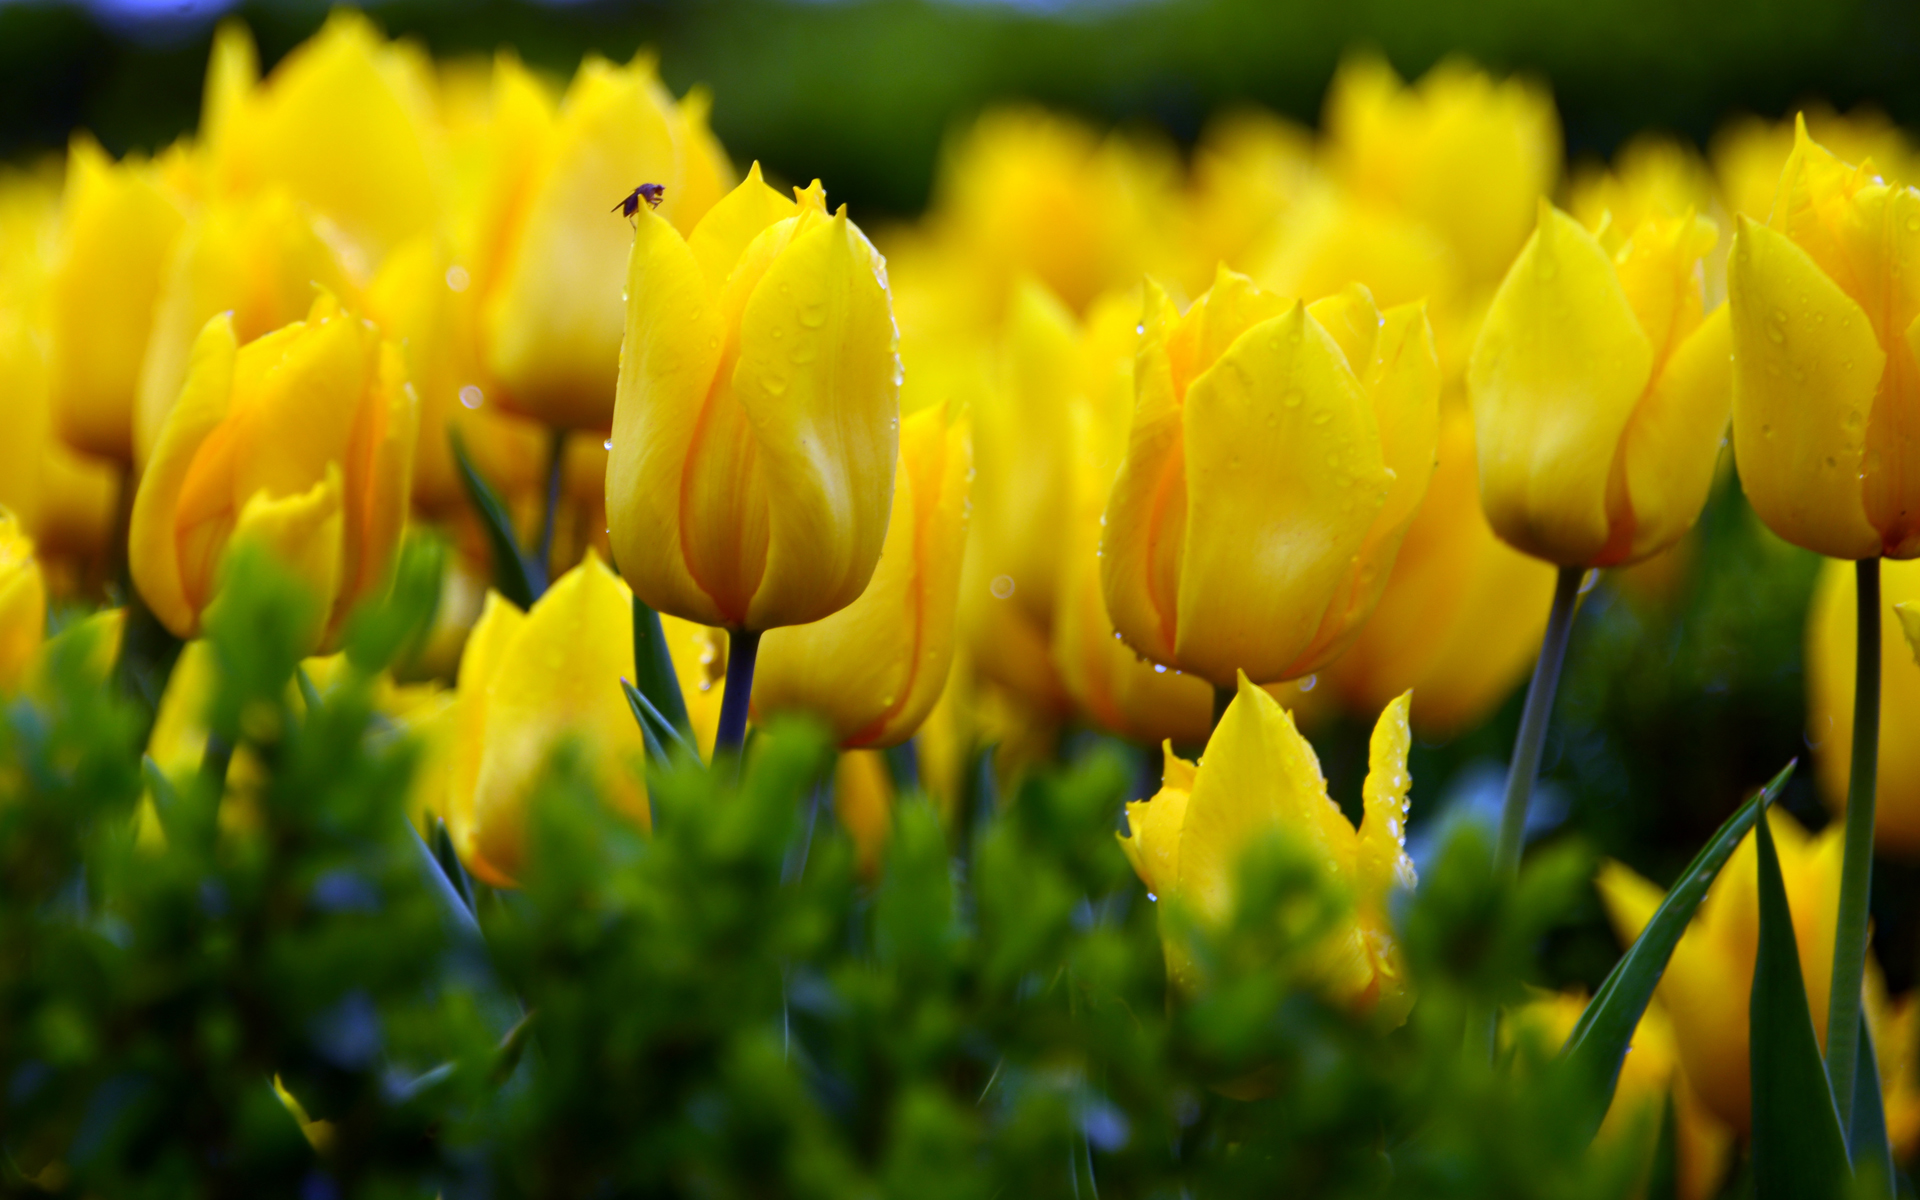 Скачать обои бесплатно Цветок, Тюльпан, Желтый Цветок, Земля/природа, Флауэрсы картинка на рабочий стол ПК